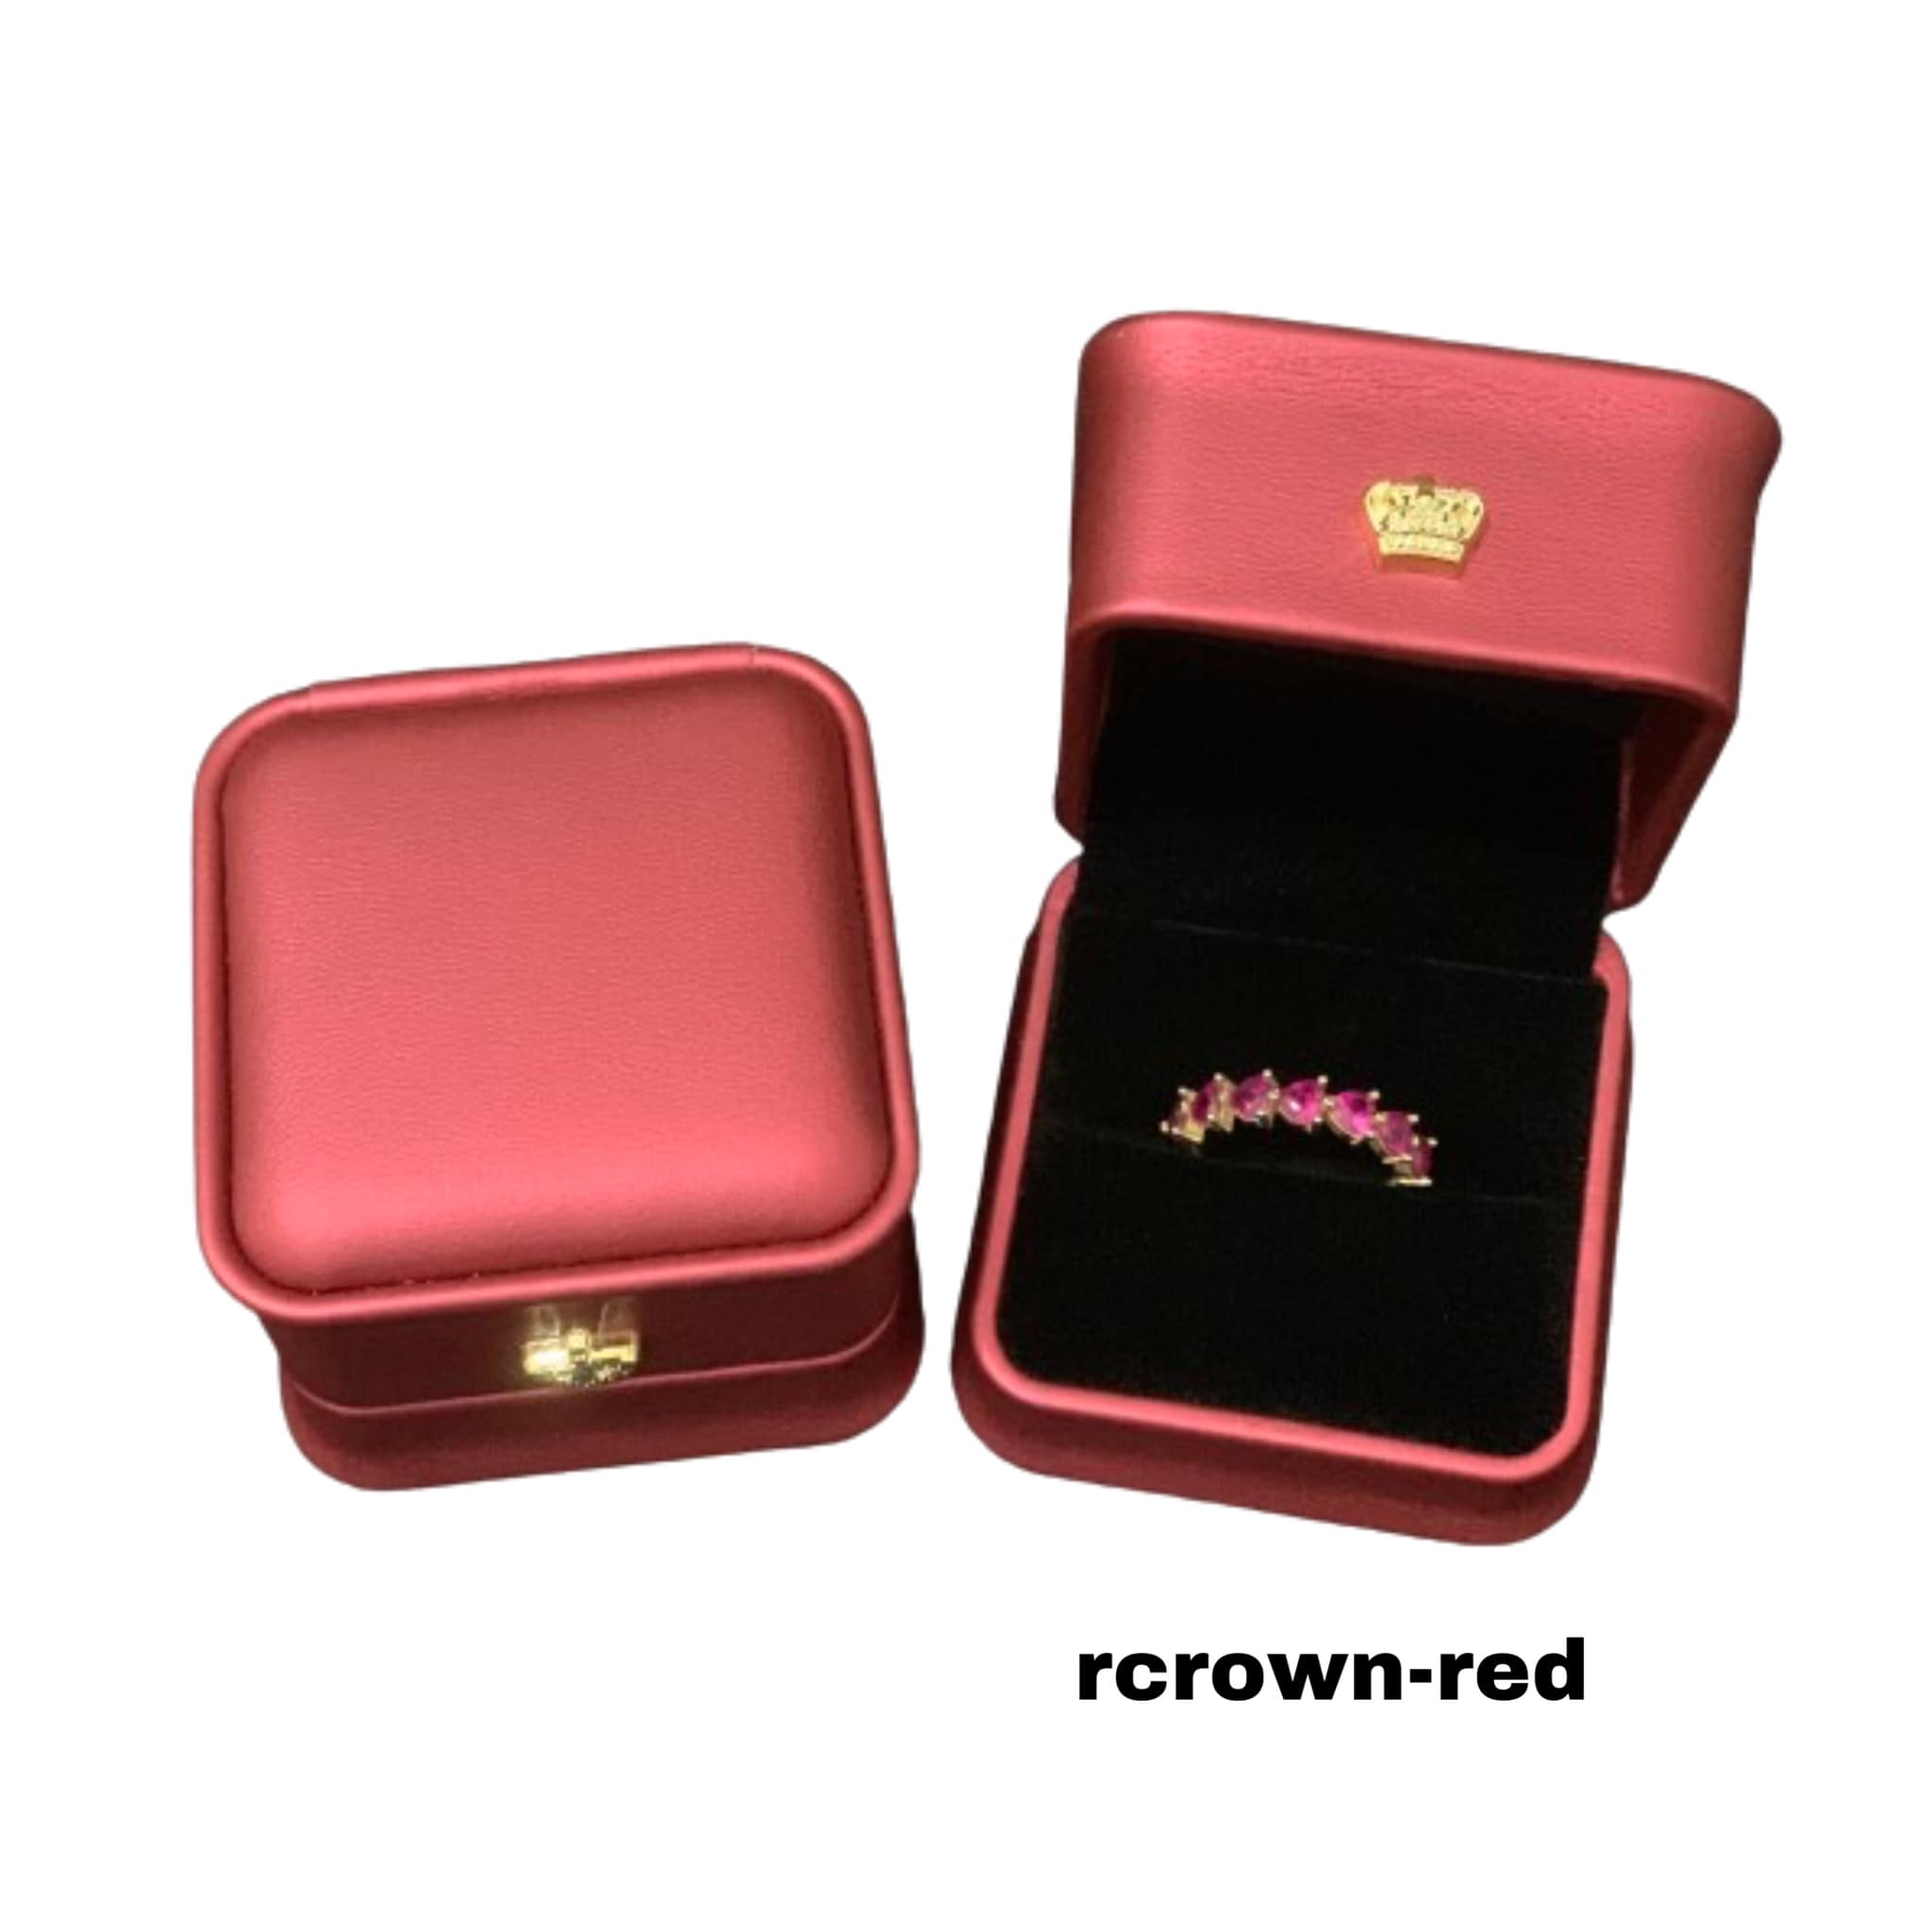 rcrown-red